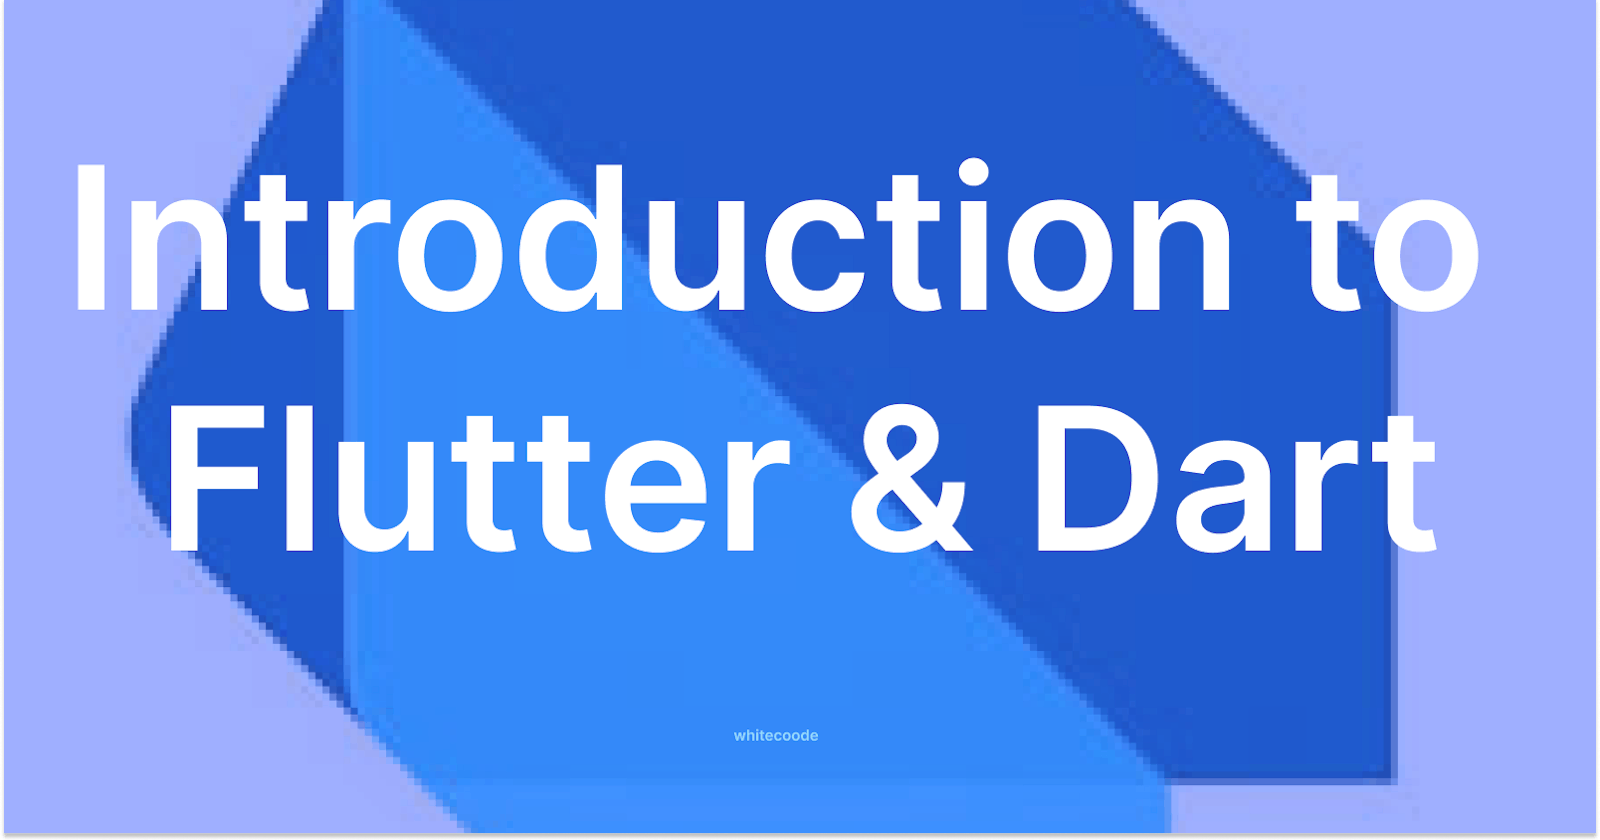 Introduction to Flutter & Dart